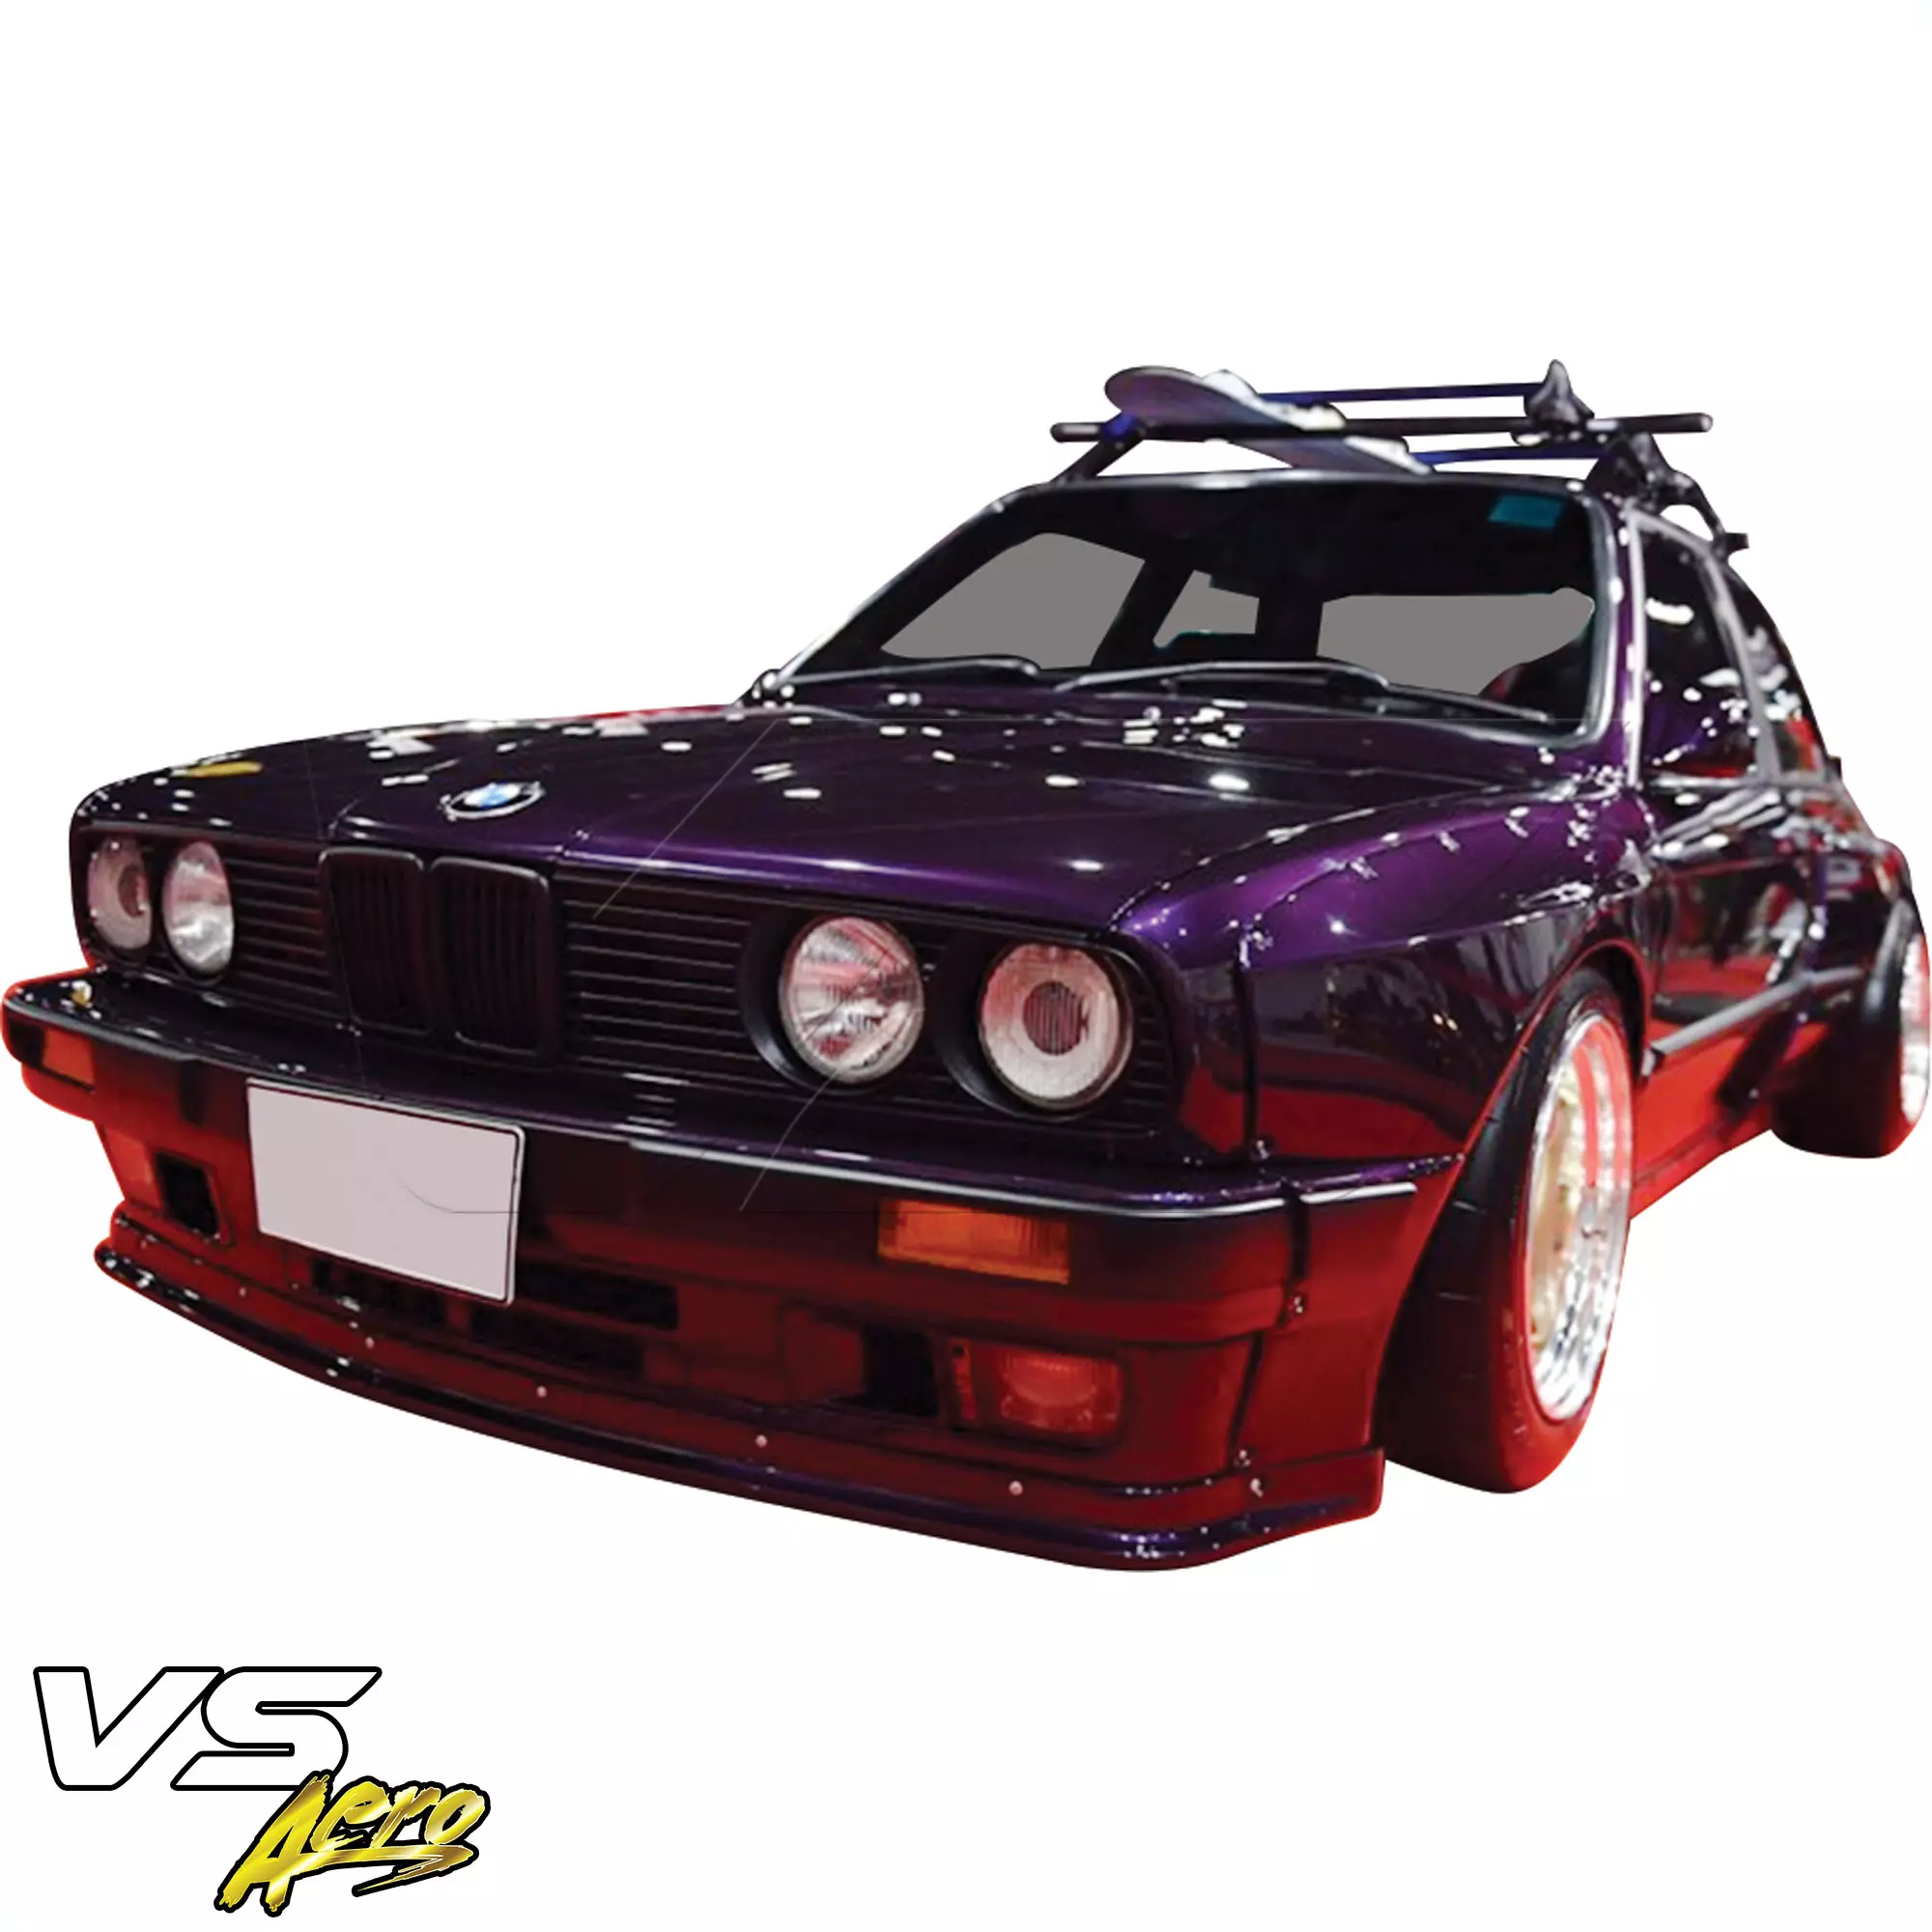 VSaero FRP TKYO Wide Body Kit w Wing 10pc > BMW 3-Series 318i 325i E30 1984-1991> 2dr Coupe - Image 17